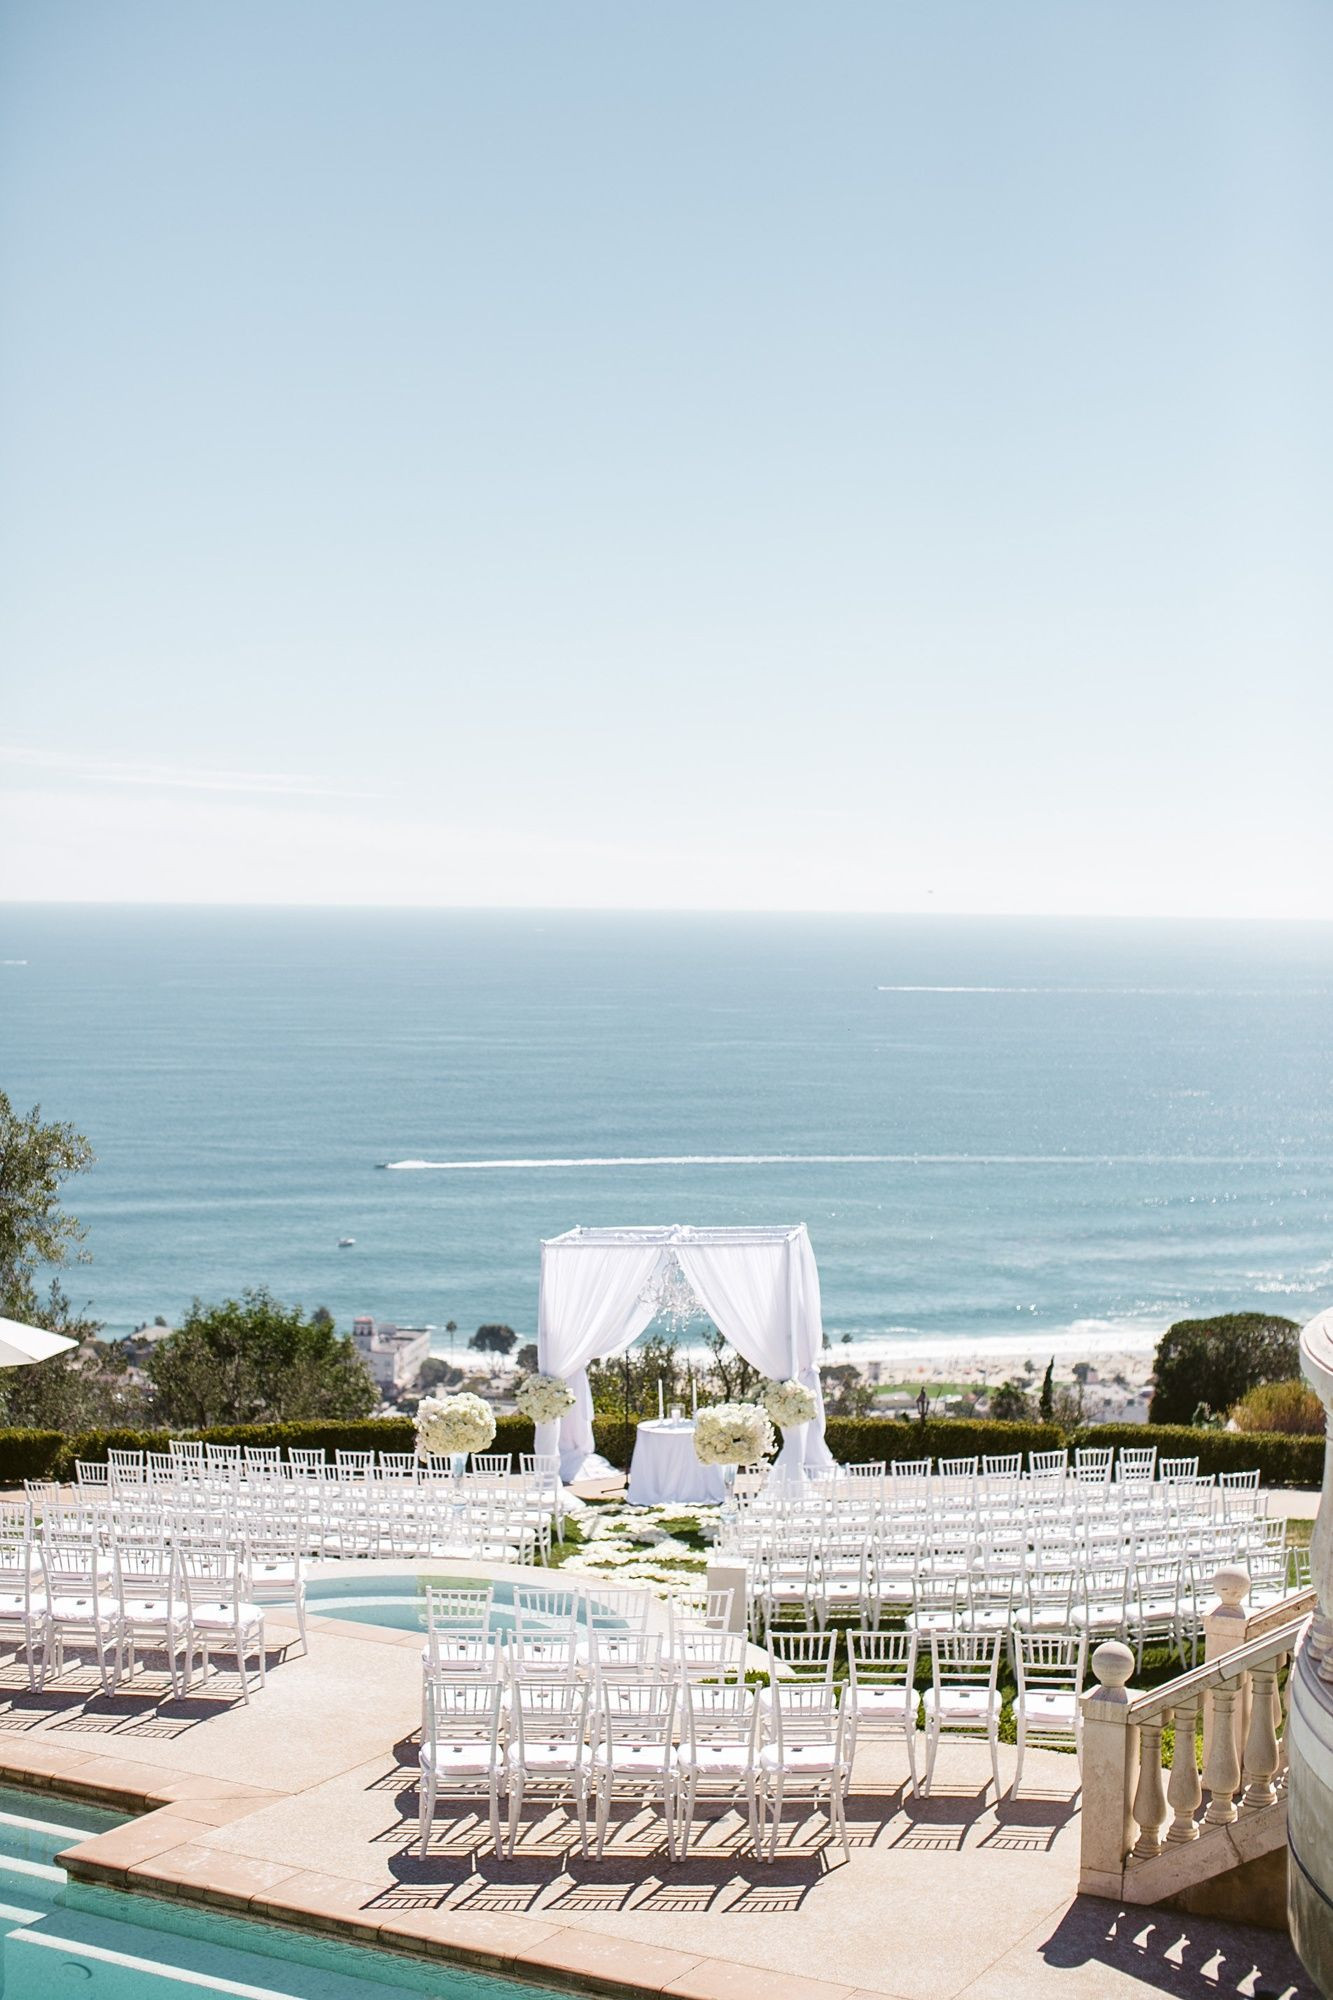 California Beach Wedding Venues
 An Elegant Seaside Wedding at Oceana Estate in Laguna